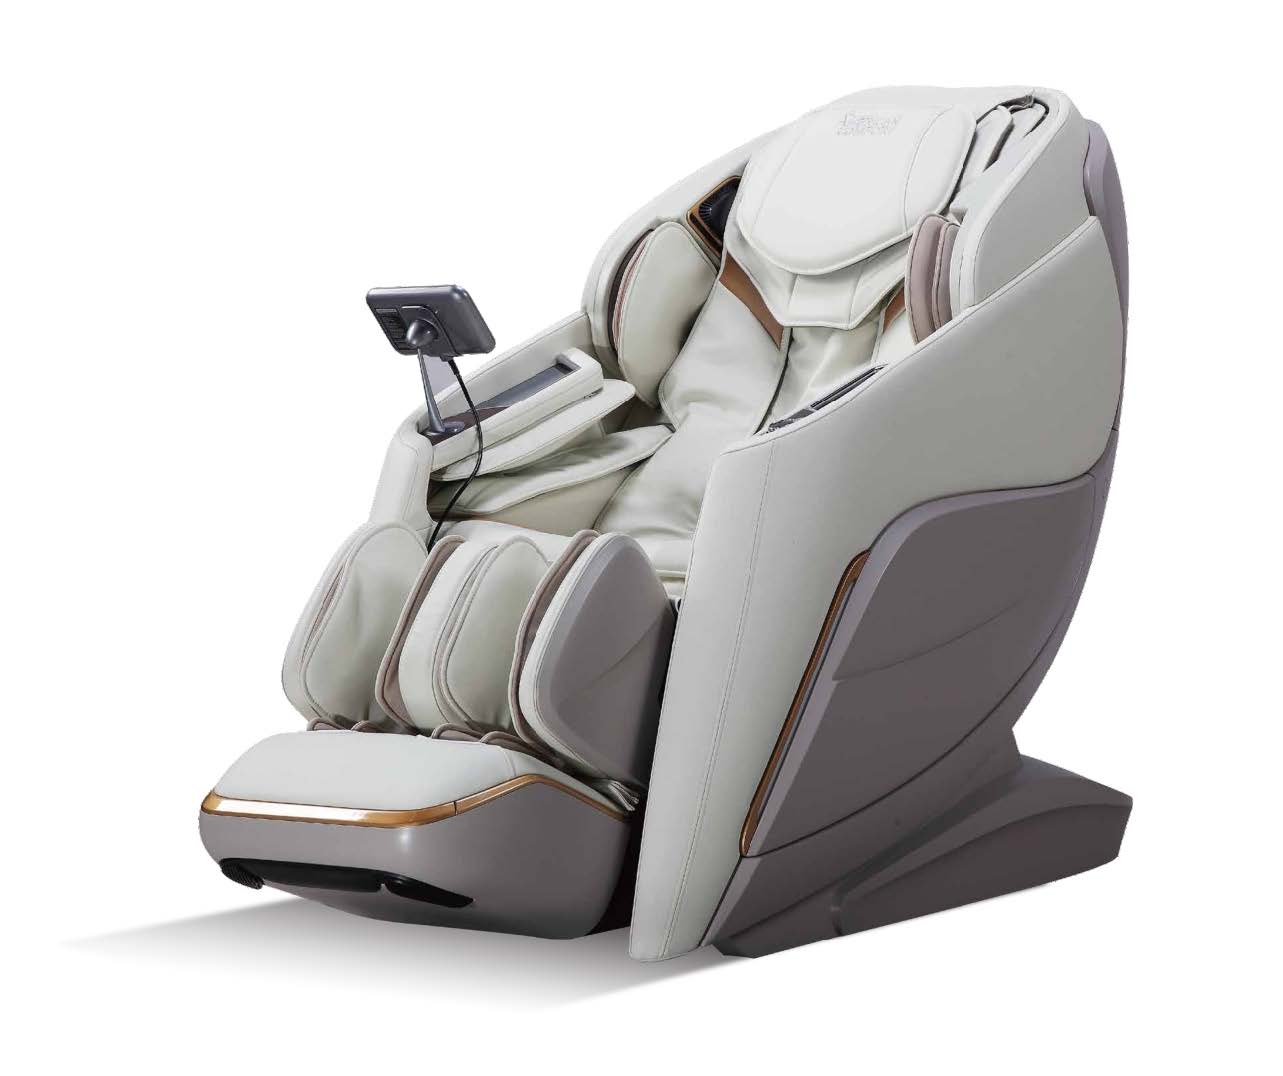 5D Massage Chair in ambala, 5D Massage Chair Manufacturers